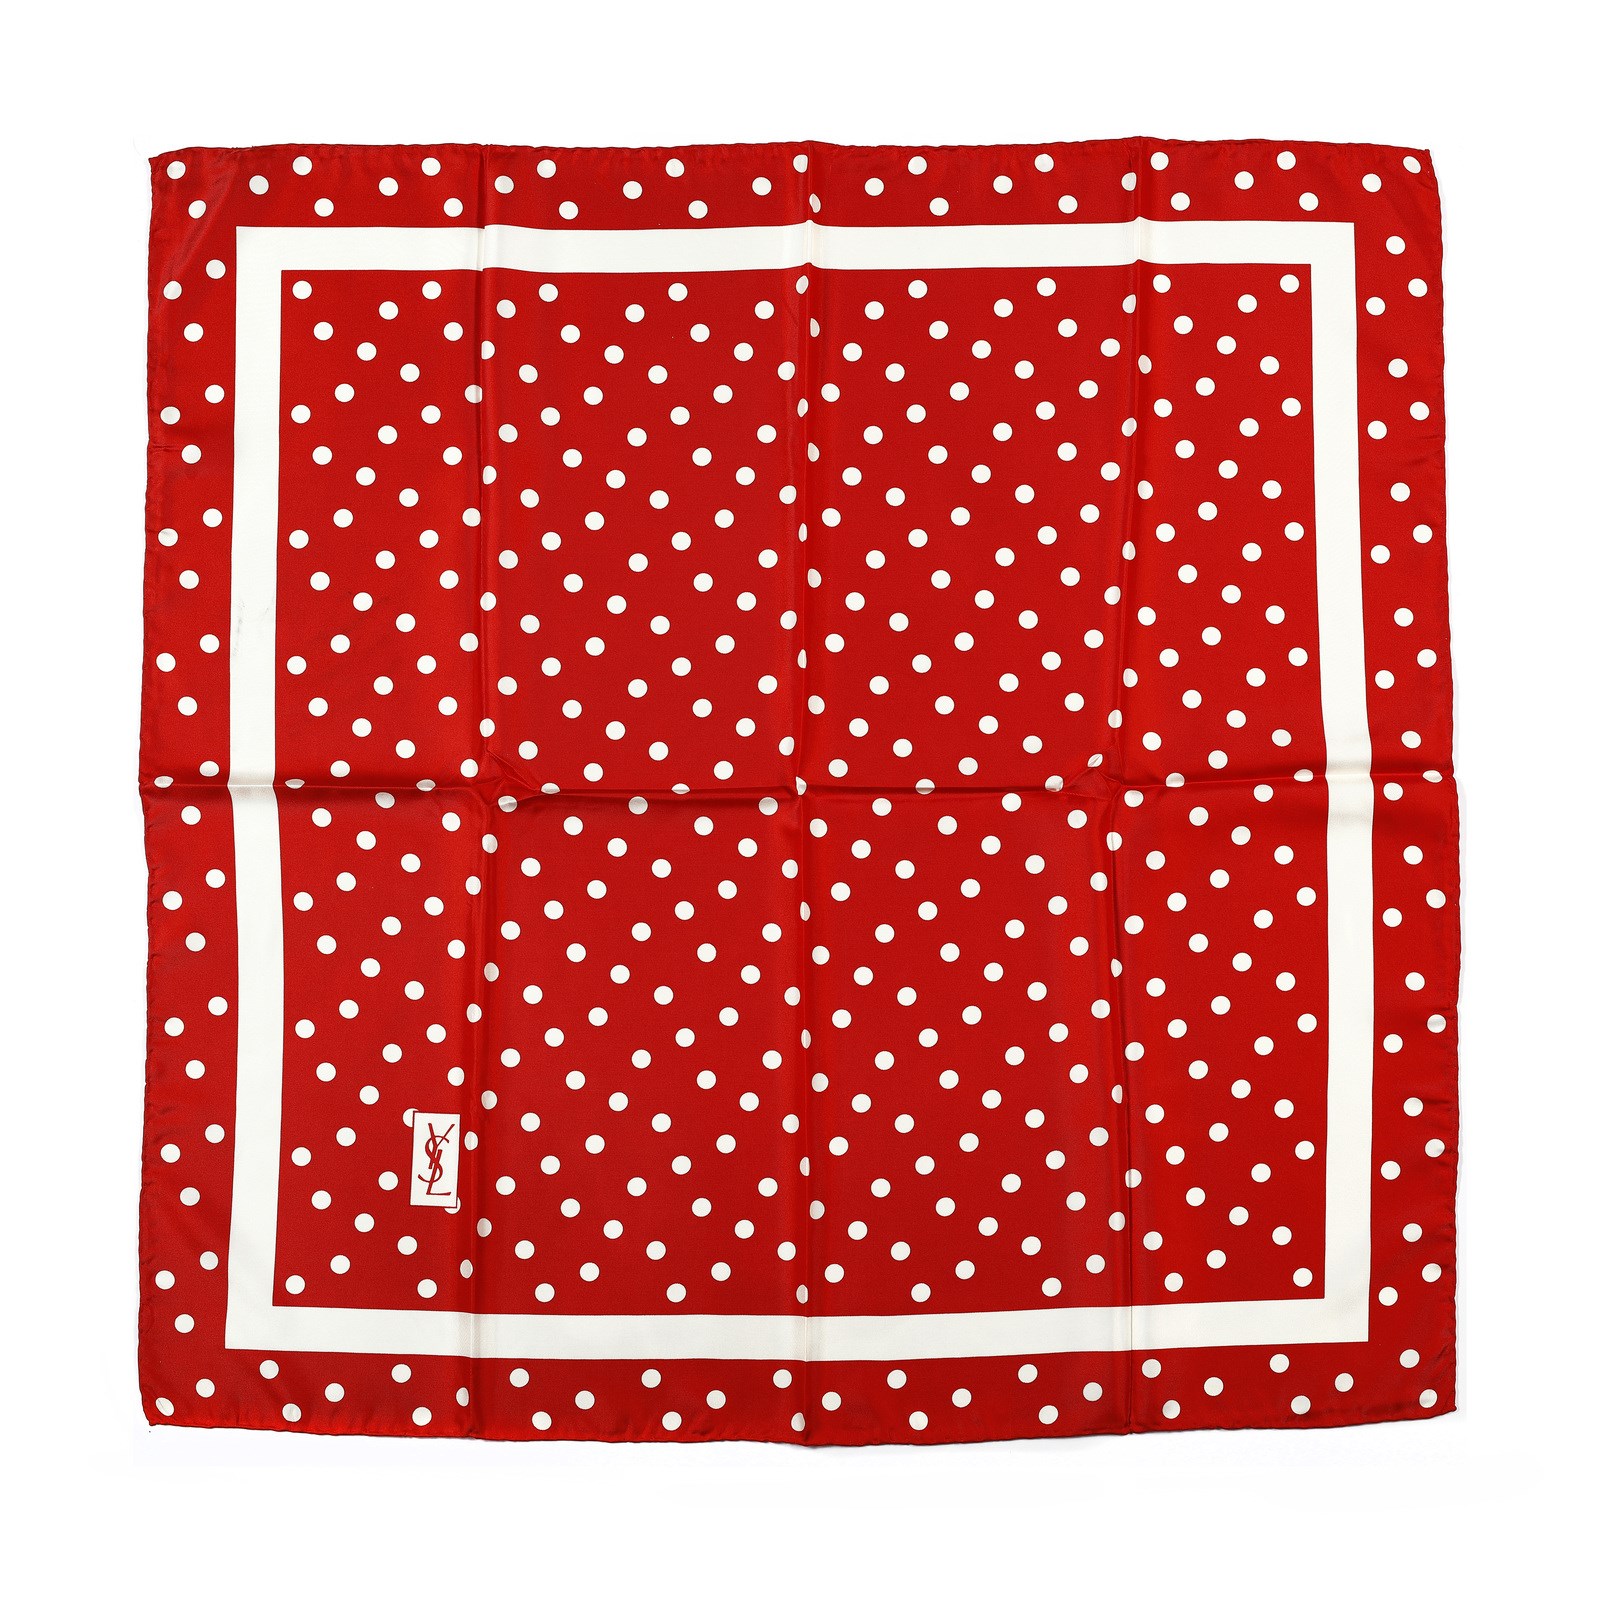 Polka dots red silk scarf. (Yves Saint Laurent)